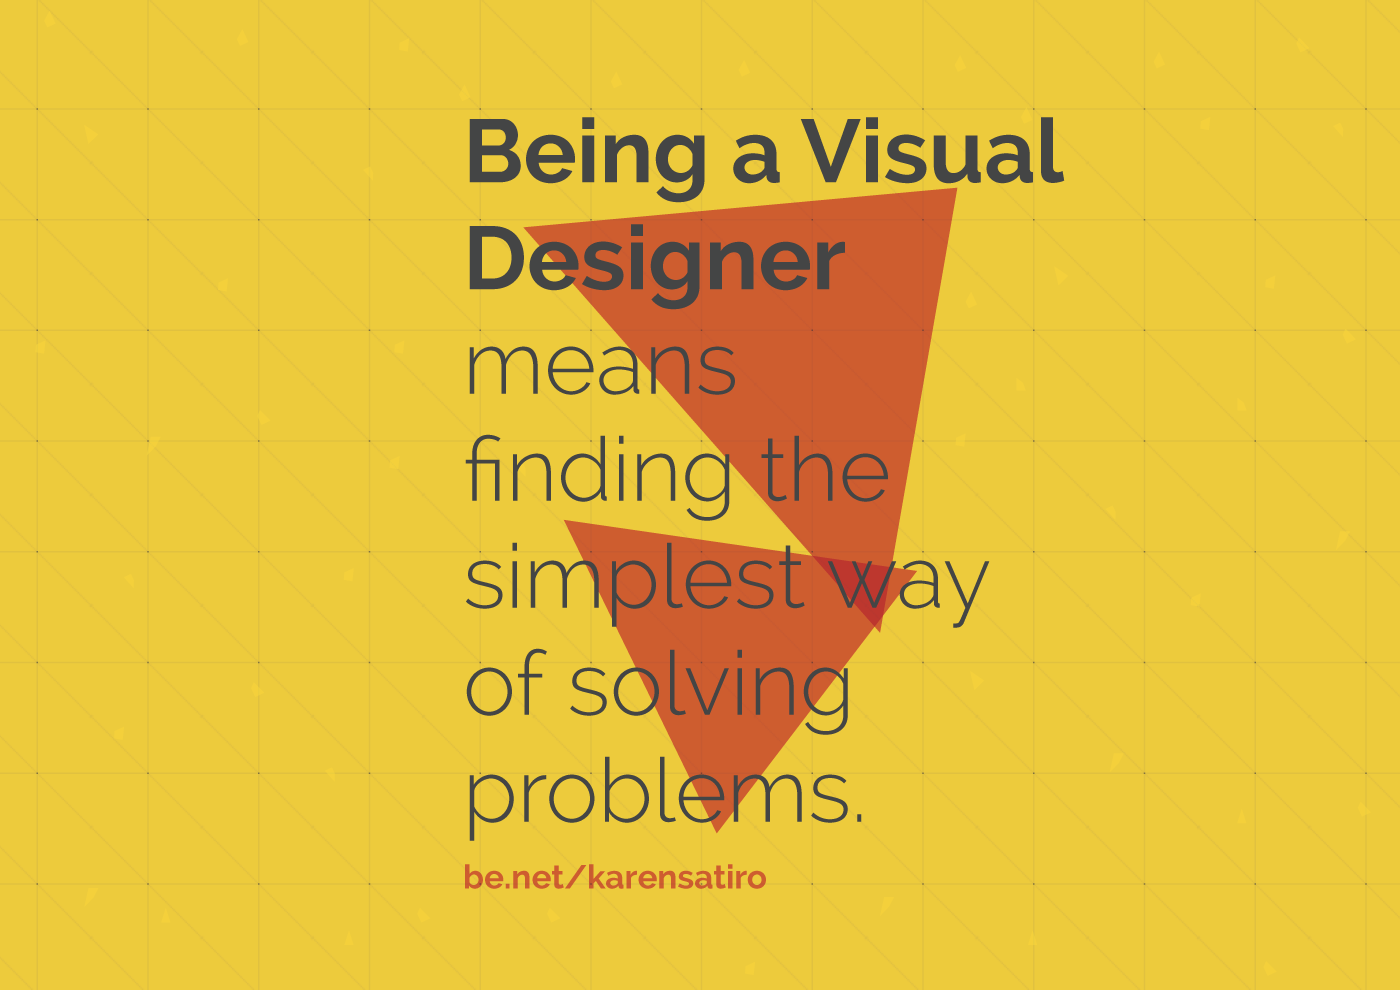 UI visual designer quote personal identity brand Karen sátiro